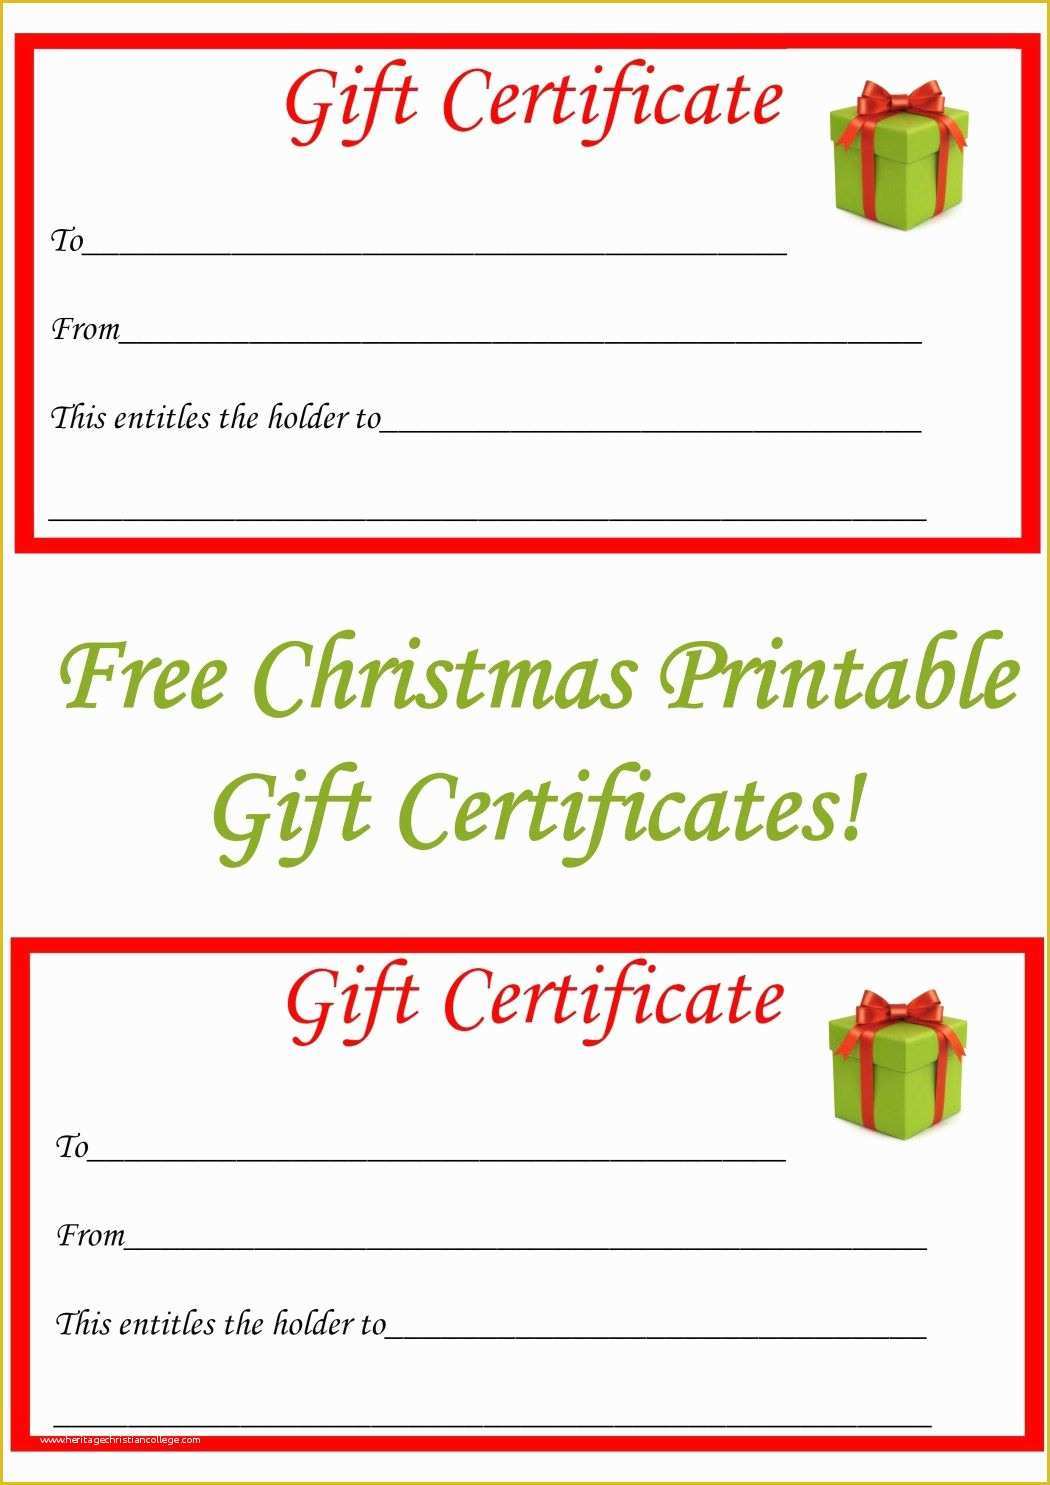 Free Printable Christmas Gift Certificate Template Word Of Best 25 Printable T Certificates Ideas On Pinterest